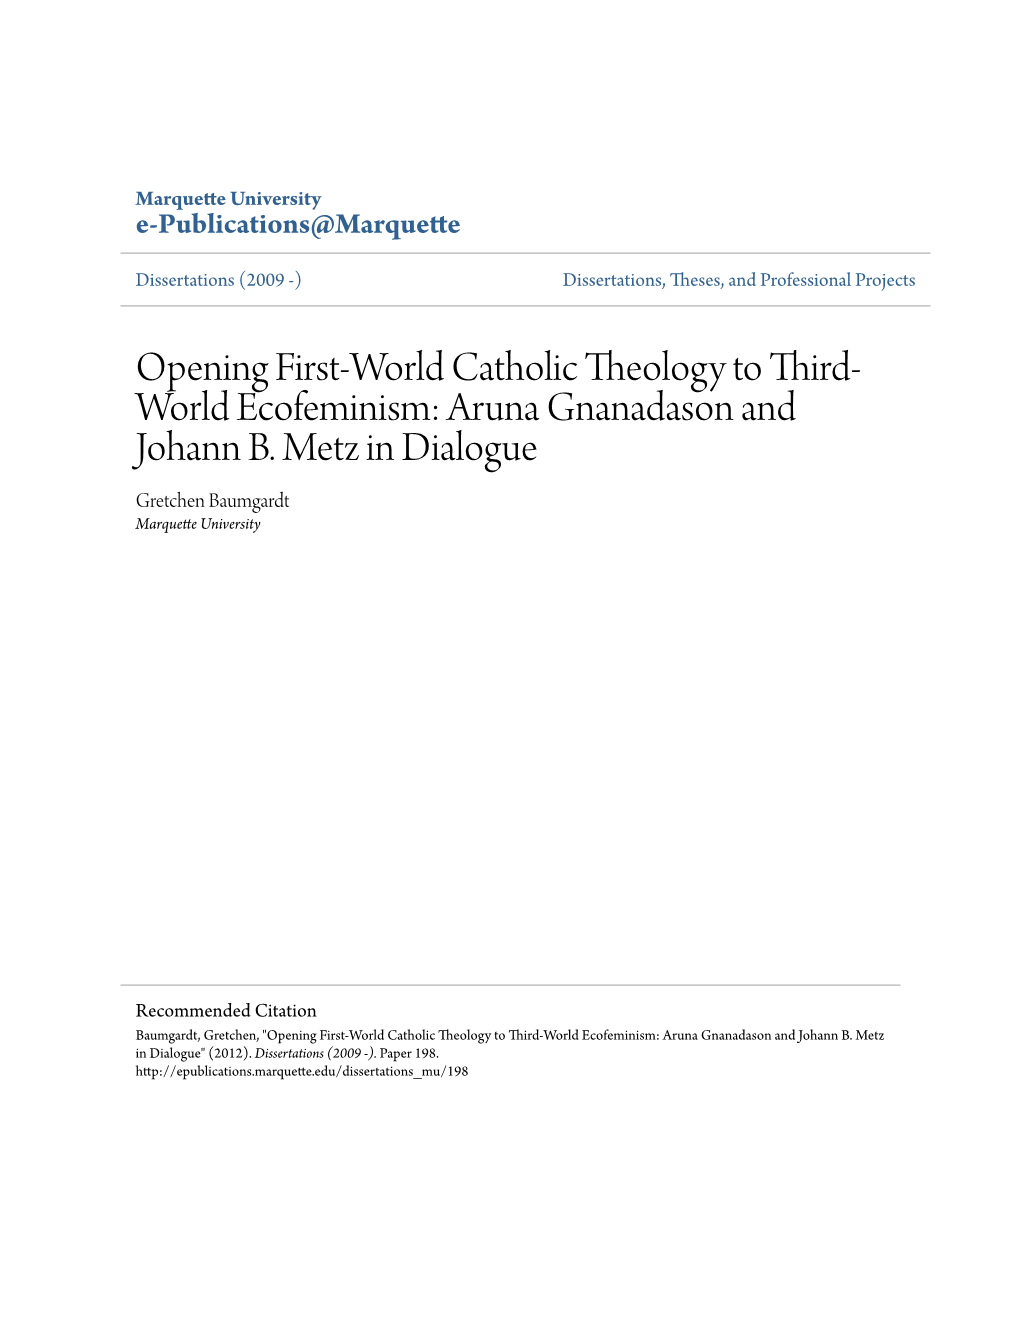 Opening First-World Catholic Theology to Third-World Ecofeminism: Aruna Gnanadason and Johann B. Metz in Dialogue" (2012)